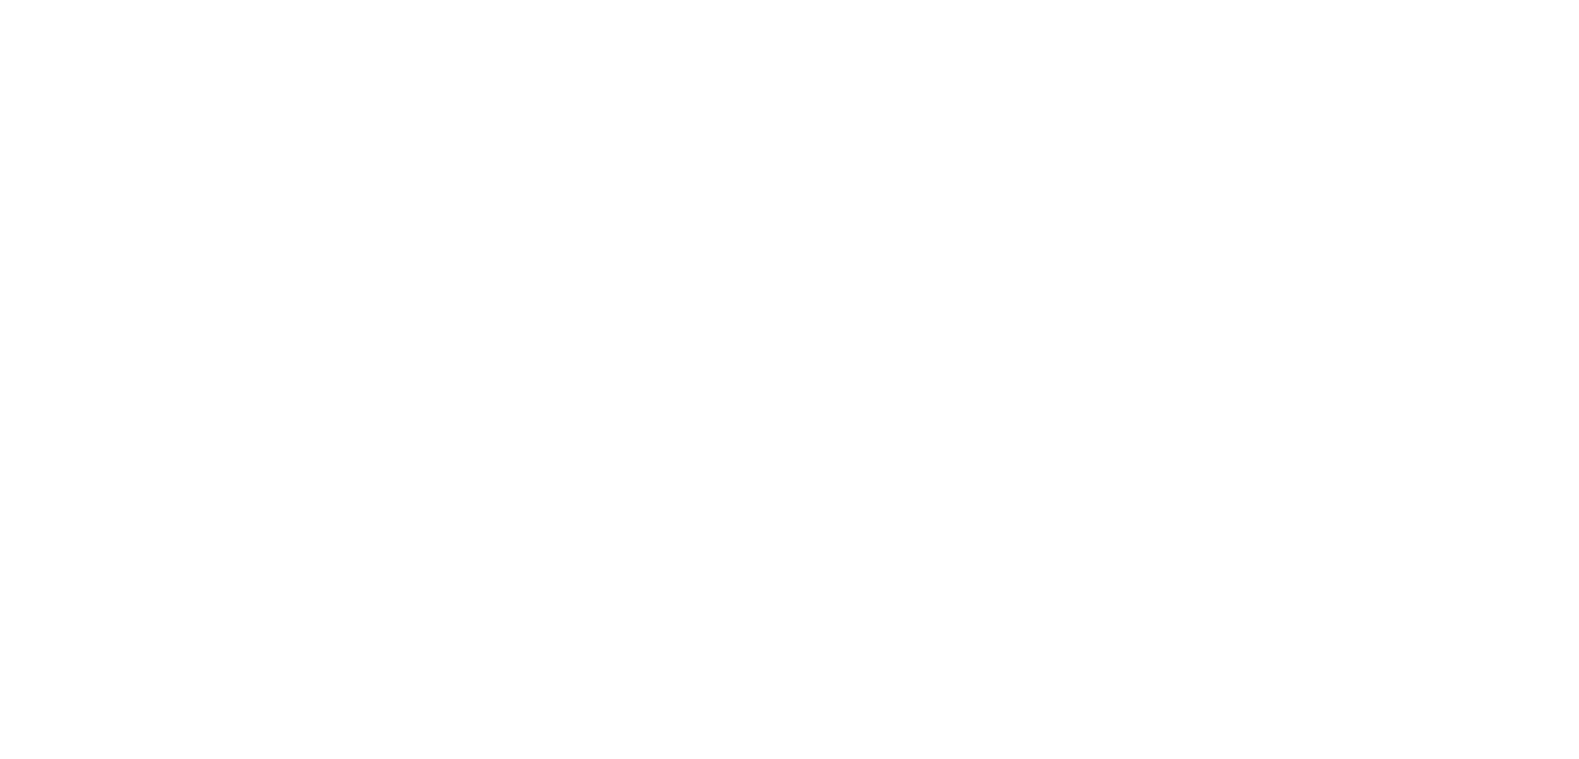 Presidio Hill School logo